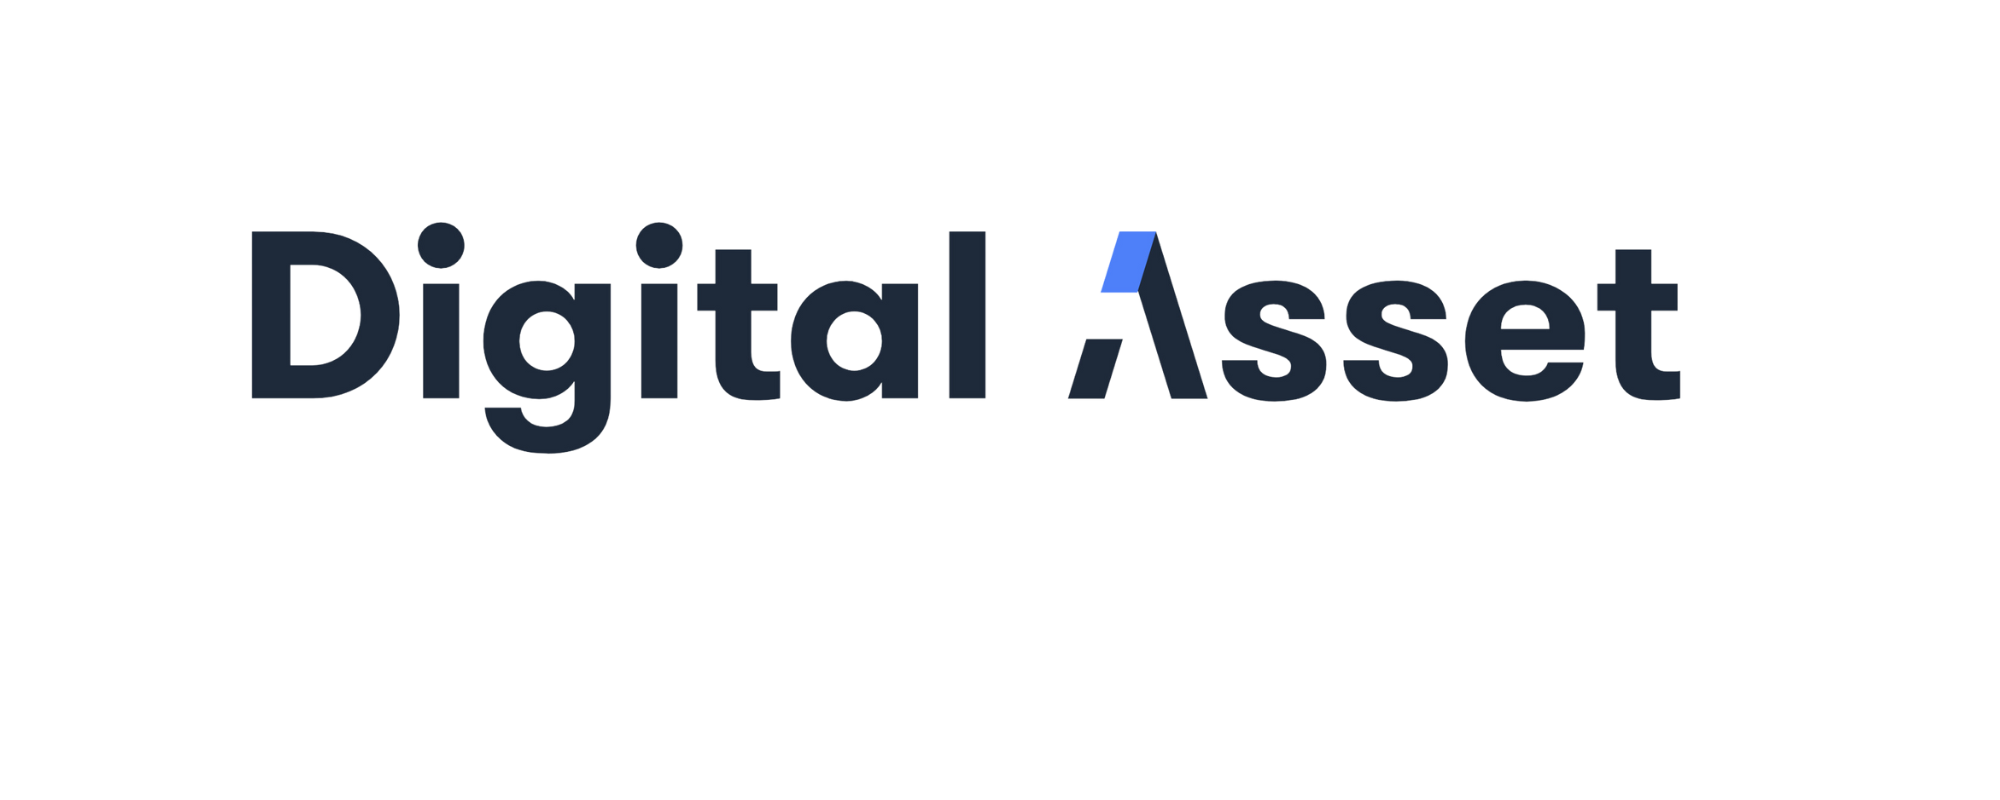 Digital Asset logo